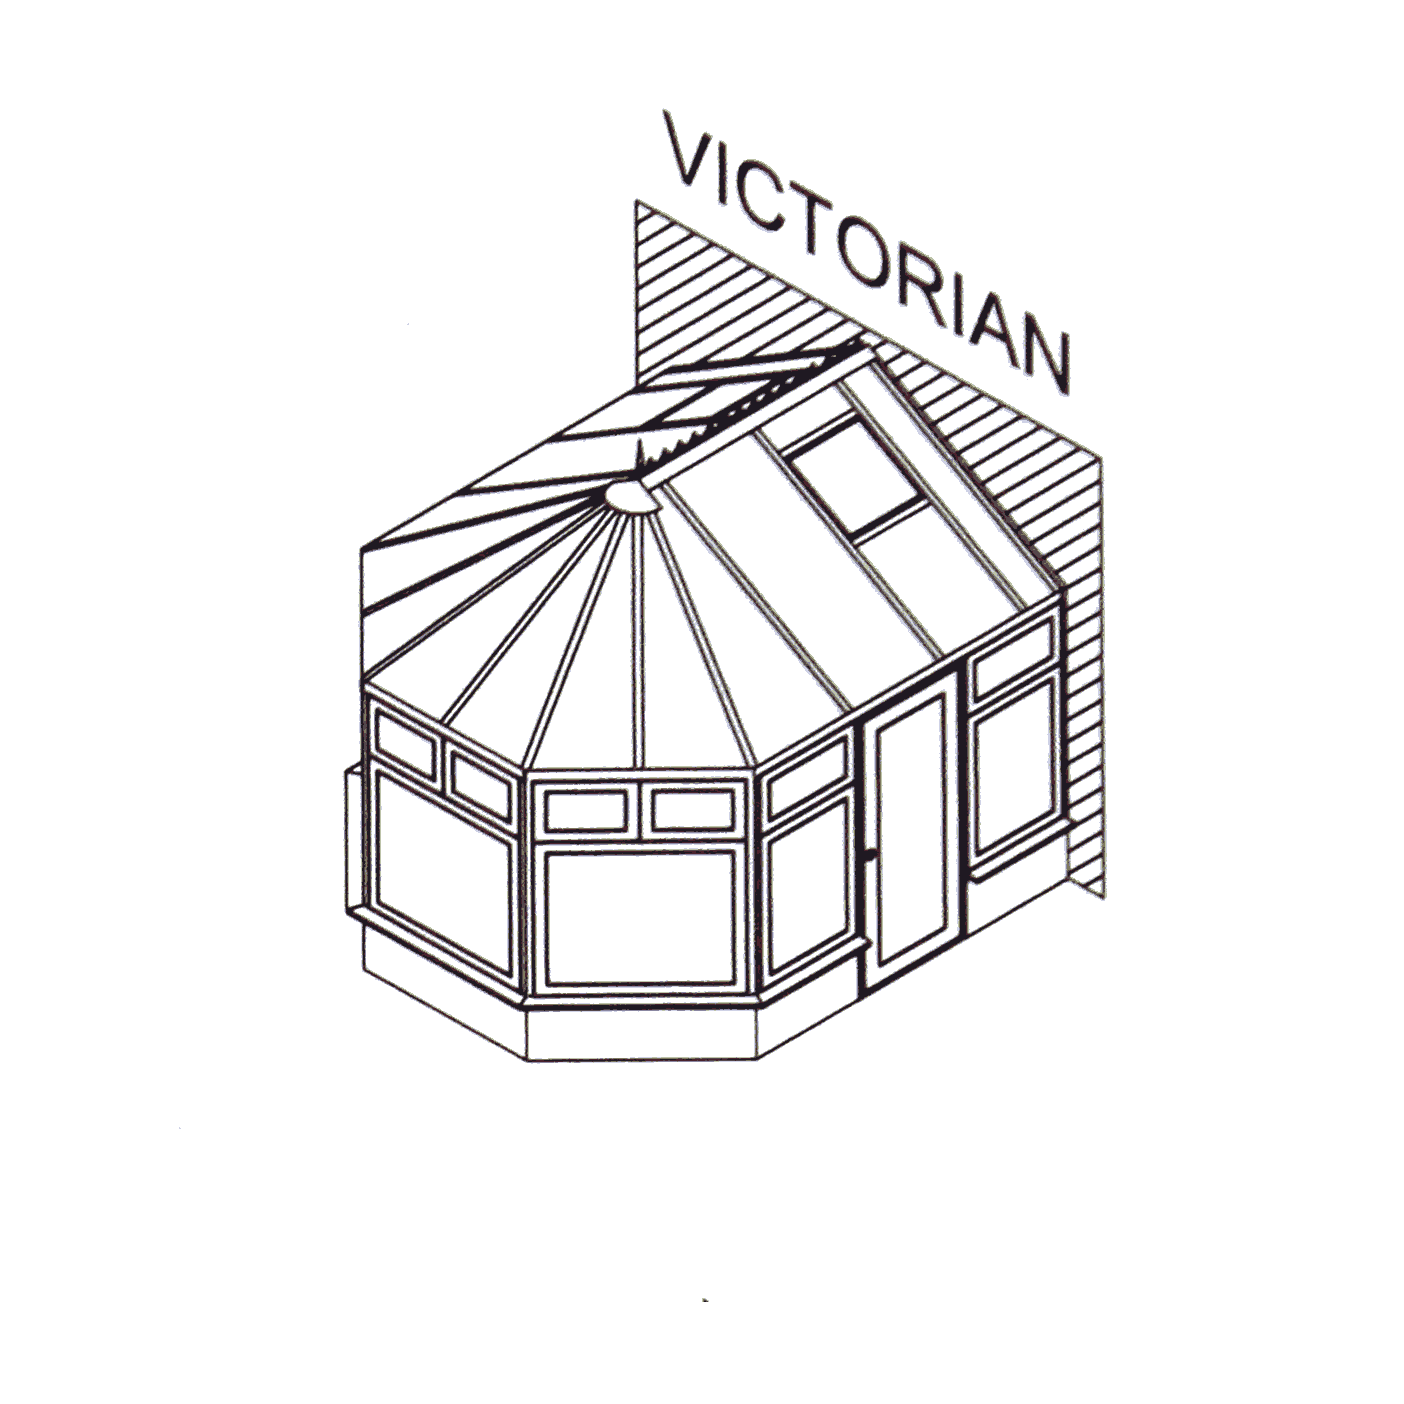 Sunroom Layouts - Victorian - Capital Sunrooms